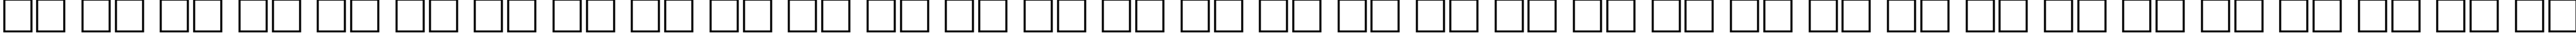 Пример написания русского алфавита шрифтом FreeSet-Bold80b